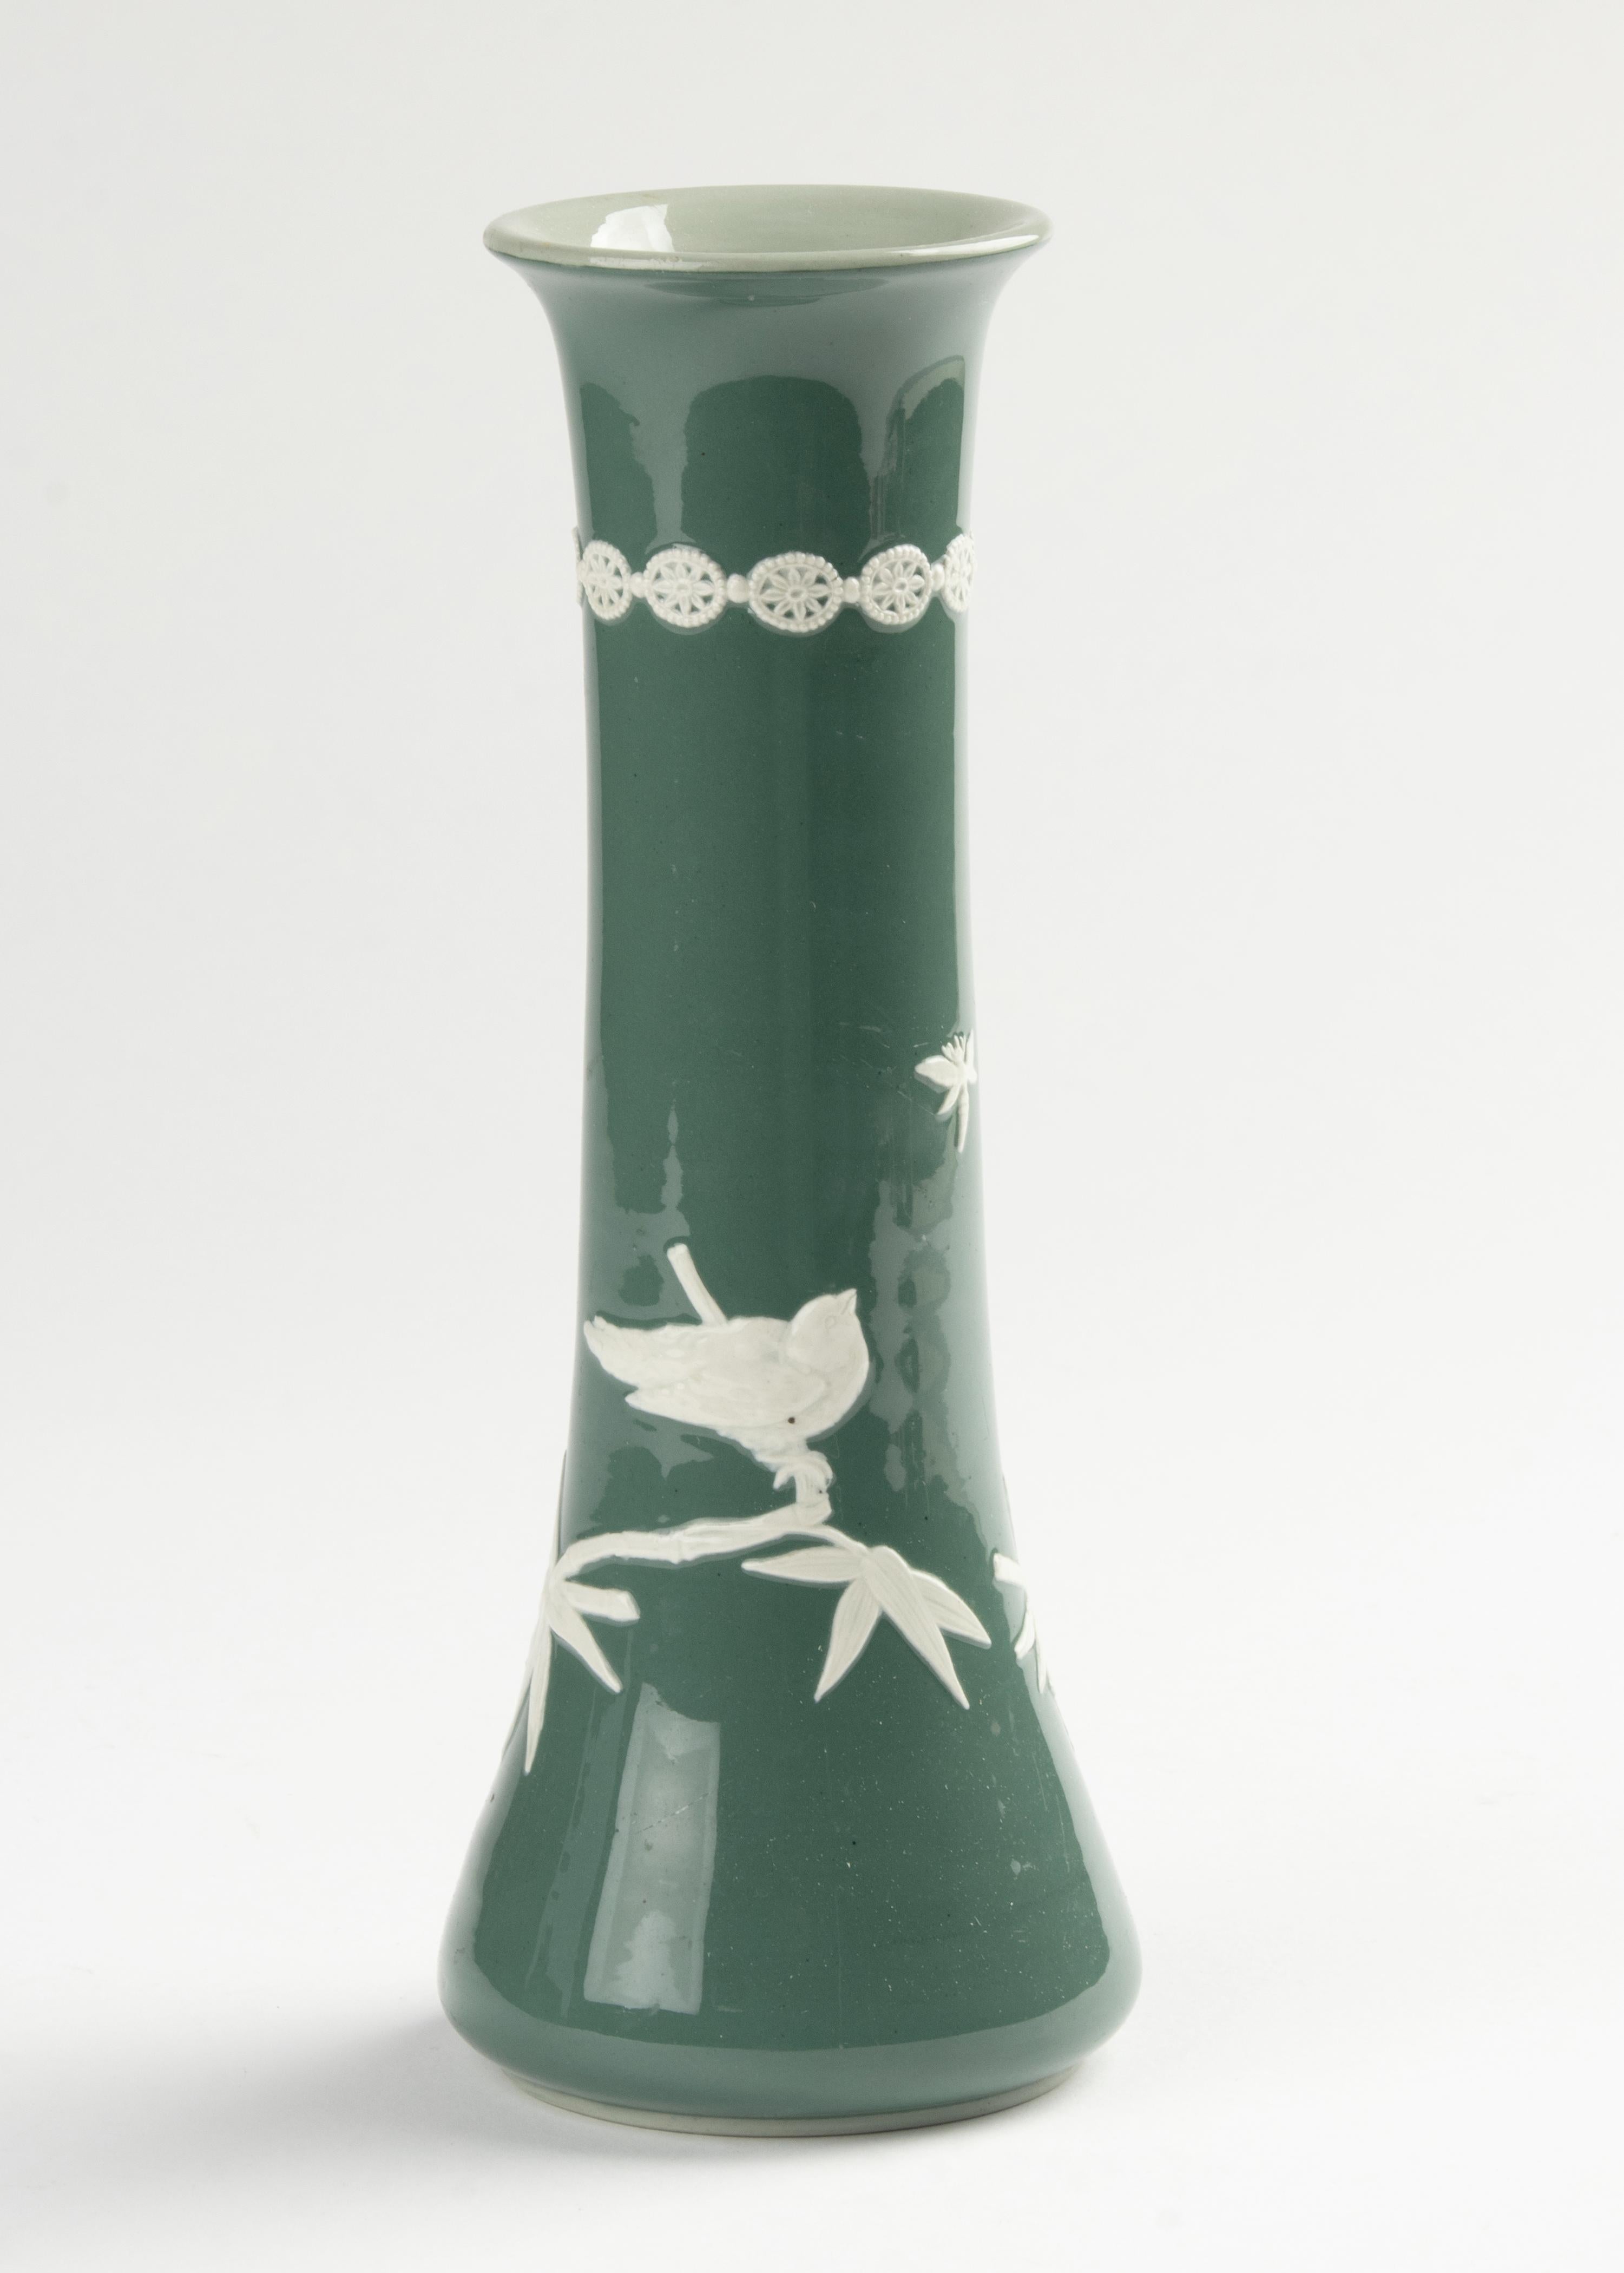 English Ceramic Art Nouveau Vase Made by Royal Doulton